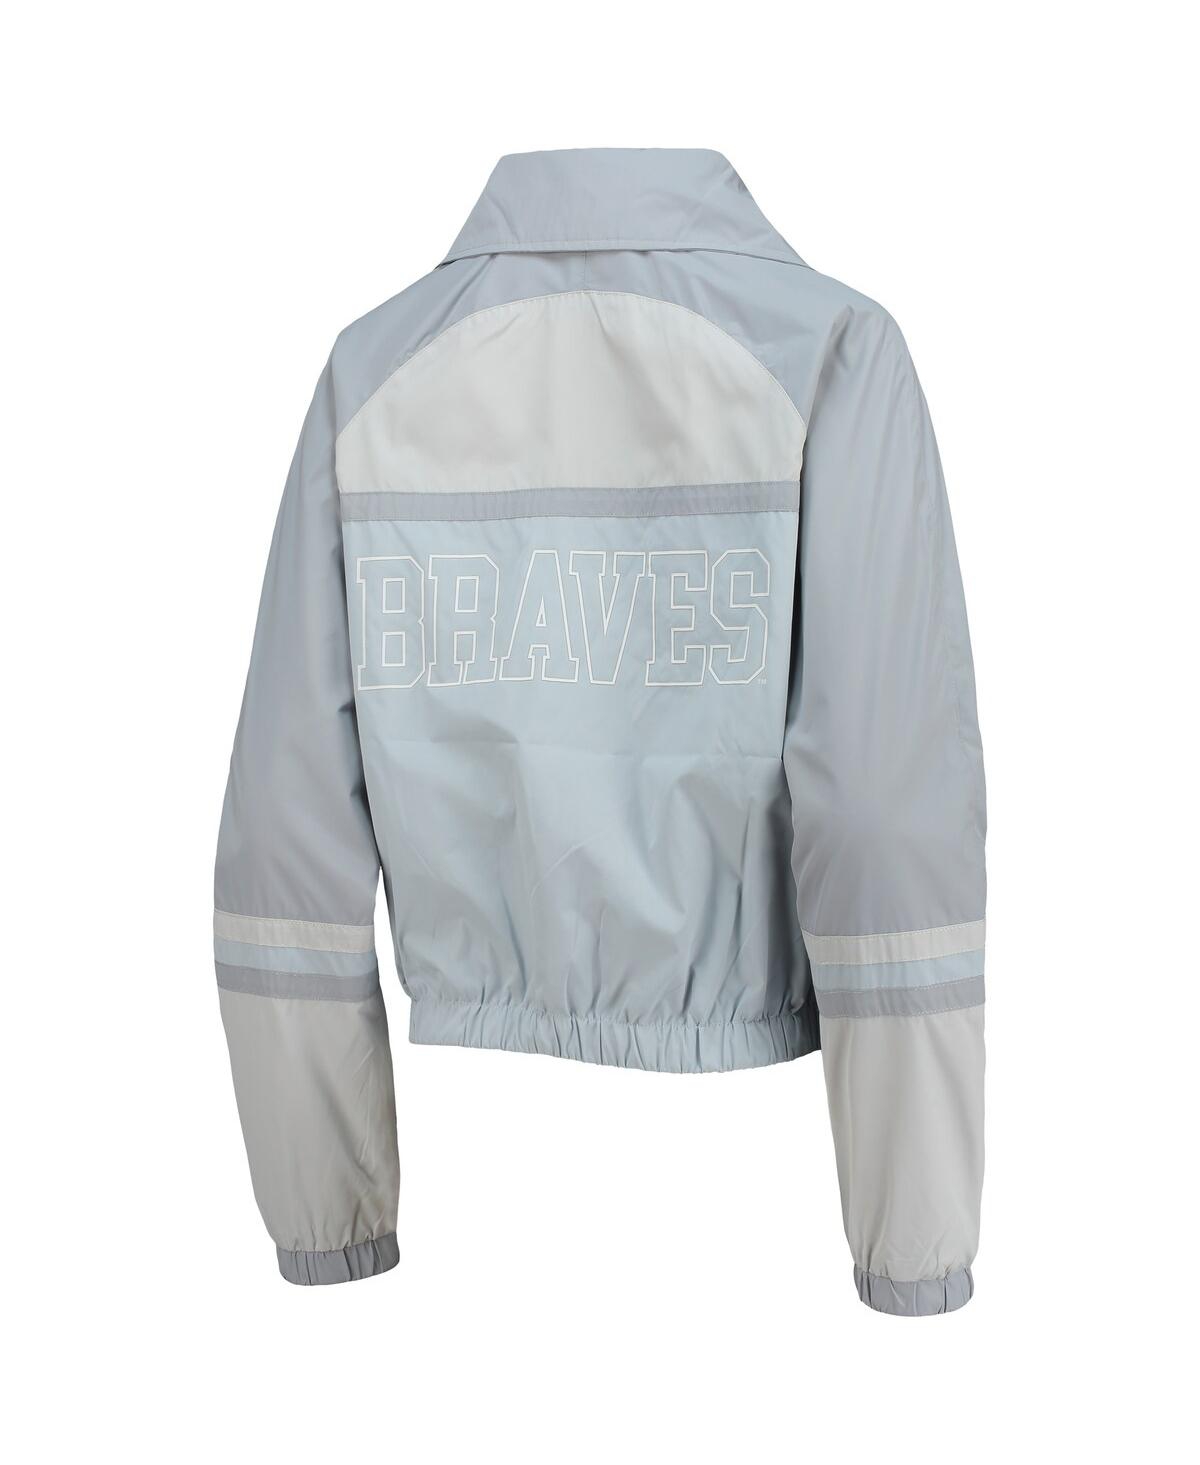 Shop The Wild Collective Women's  Light Blue Atlanta Braves Colorblock Track Raglan Full-zip Jacket